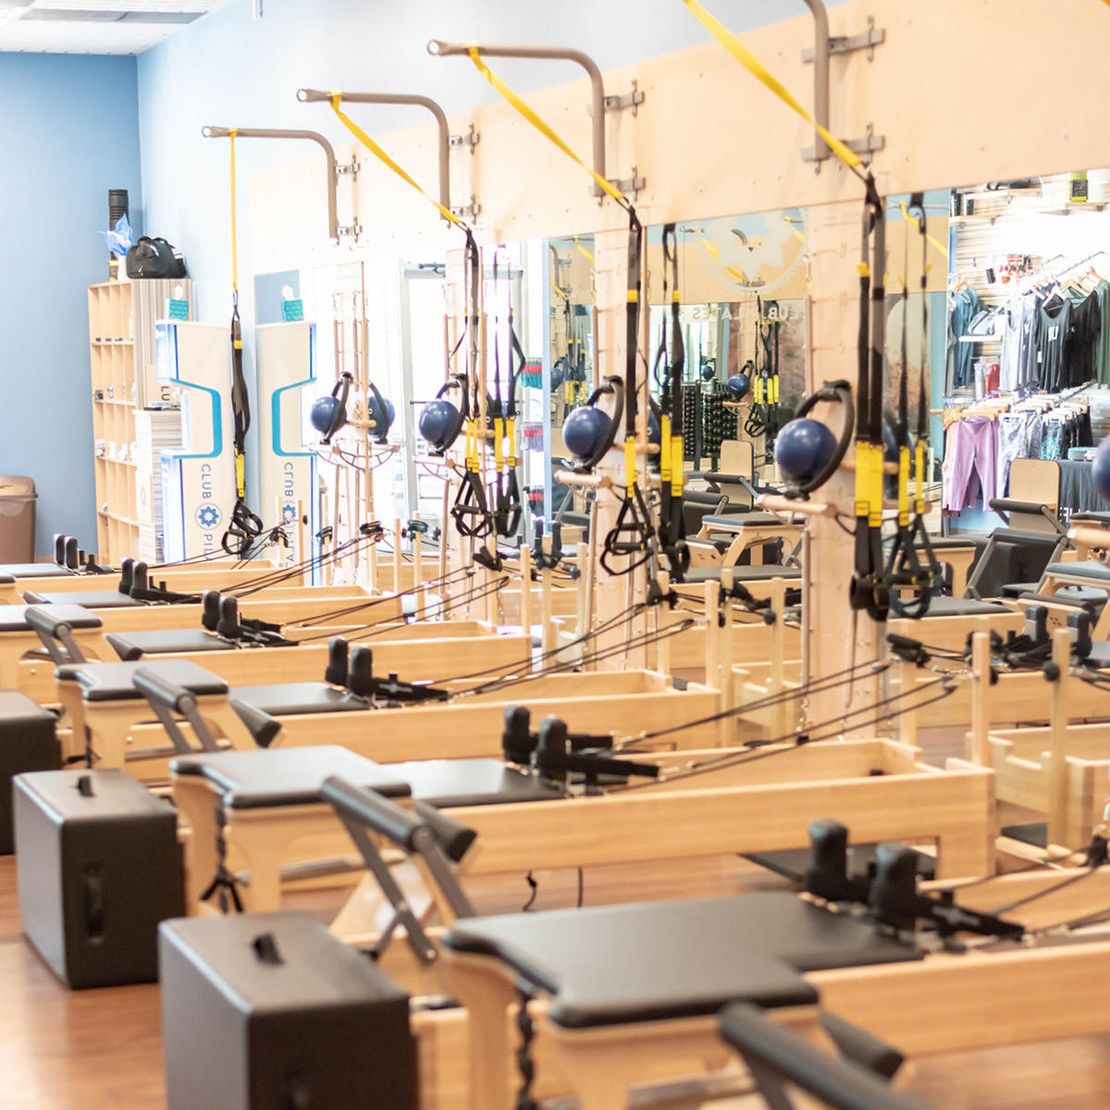 Club Pilates to open locations in Fullerton, Brea – Orange County